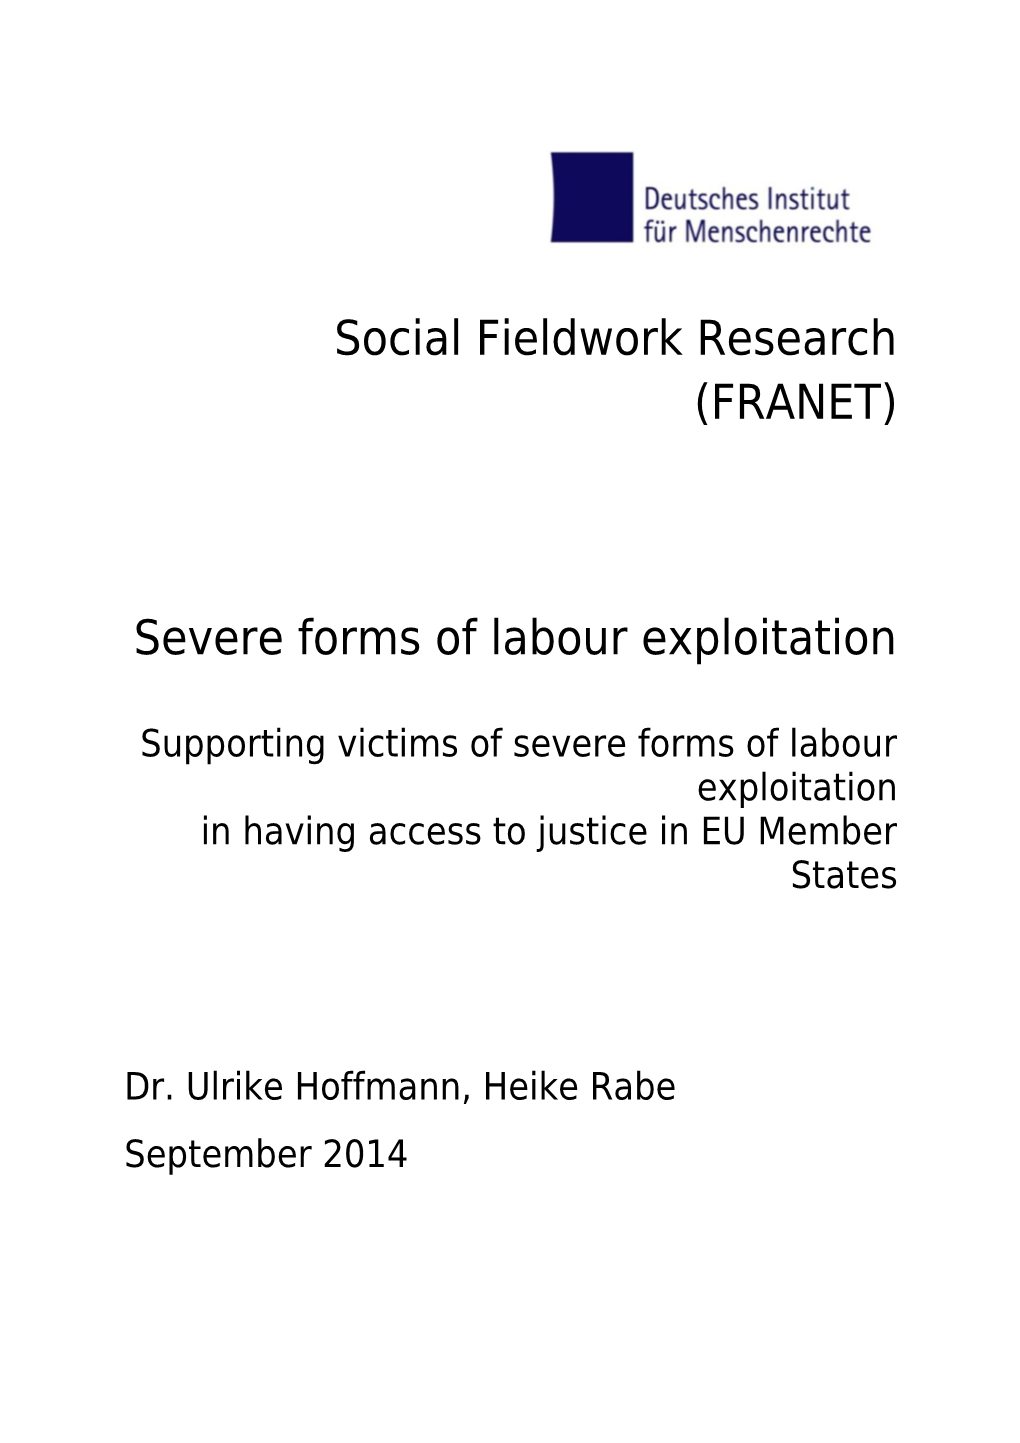 Social Fieldwork Research (FRANET)